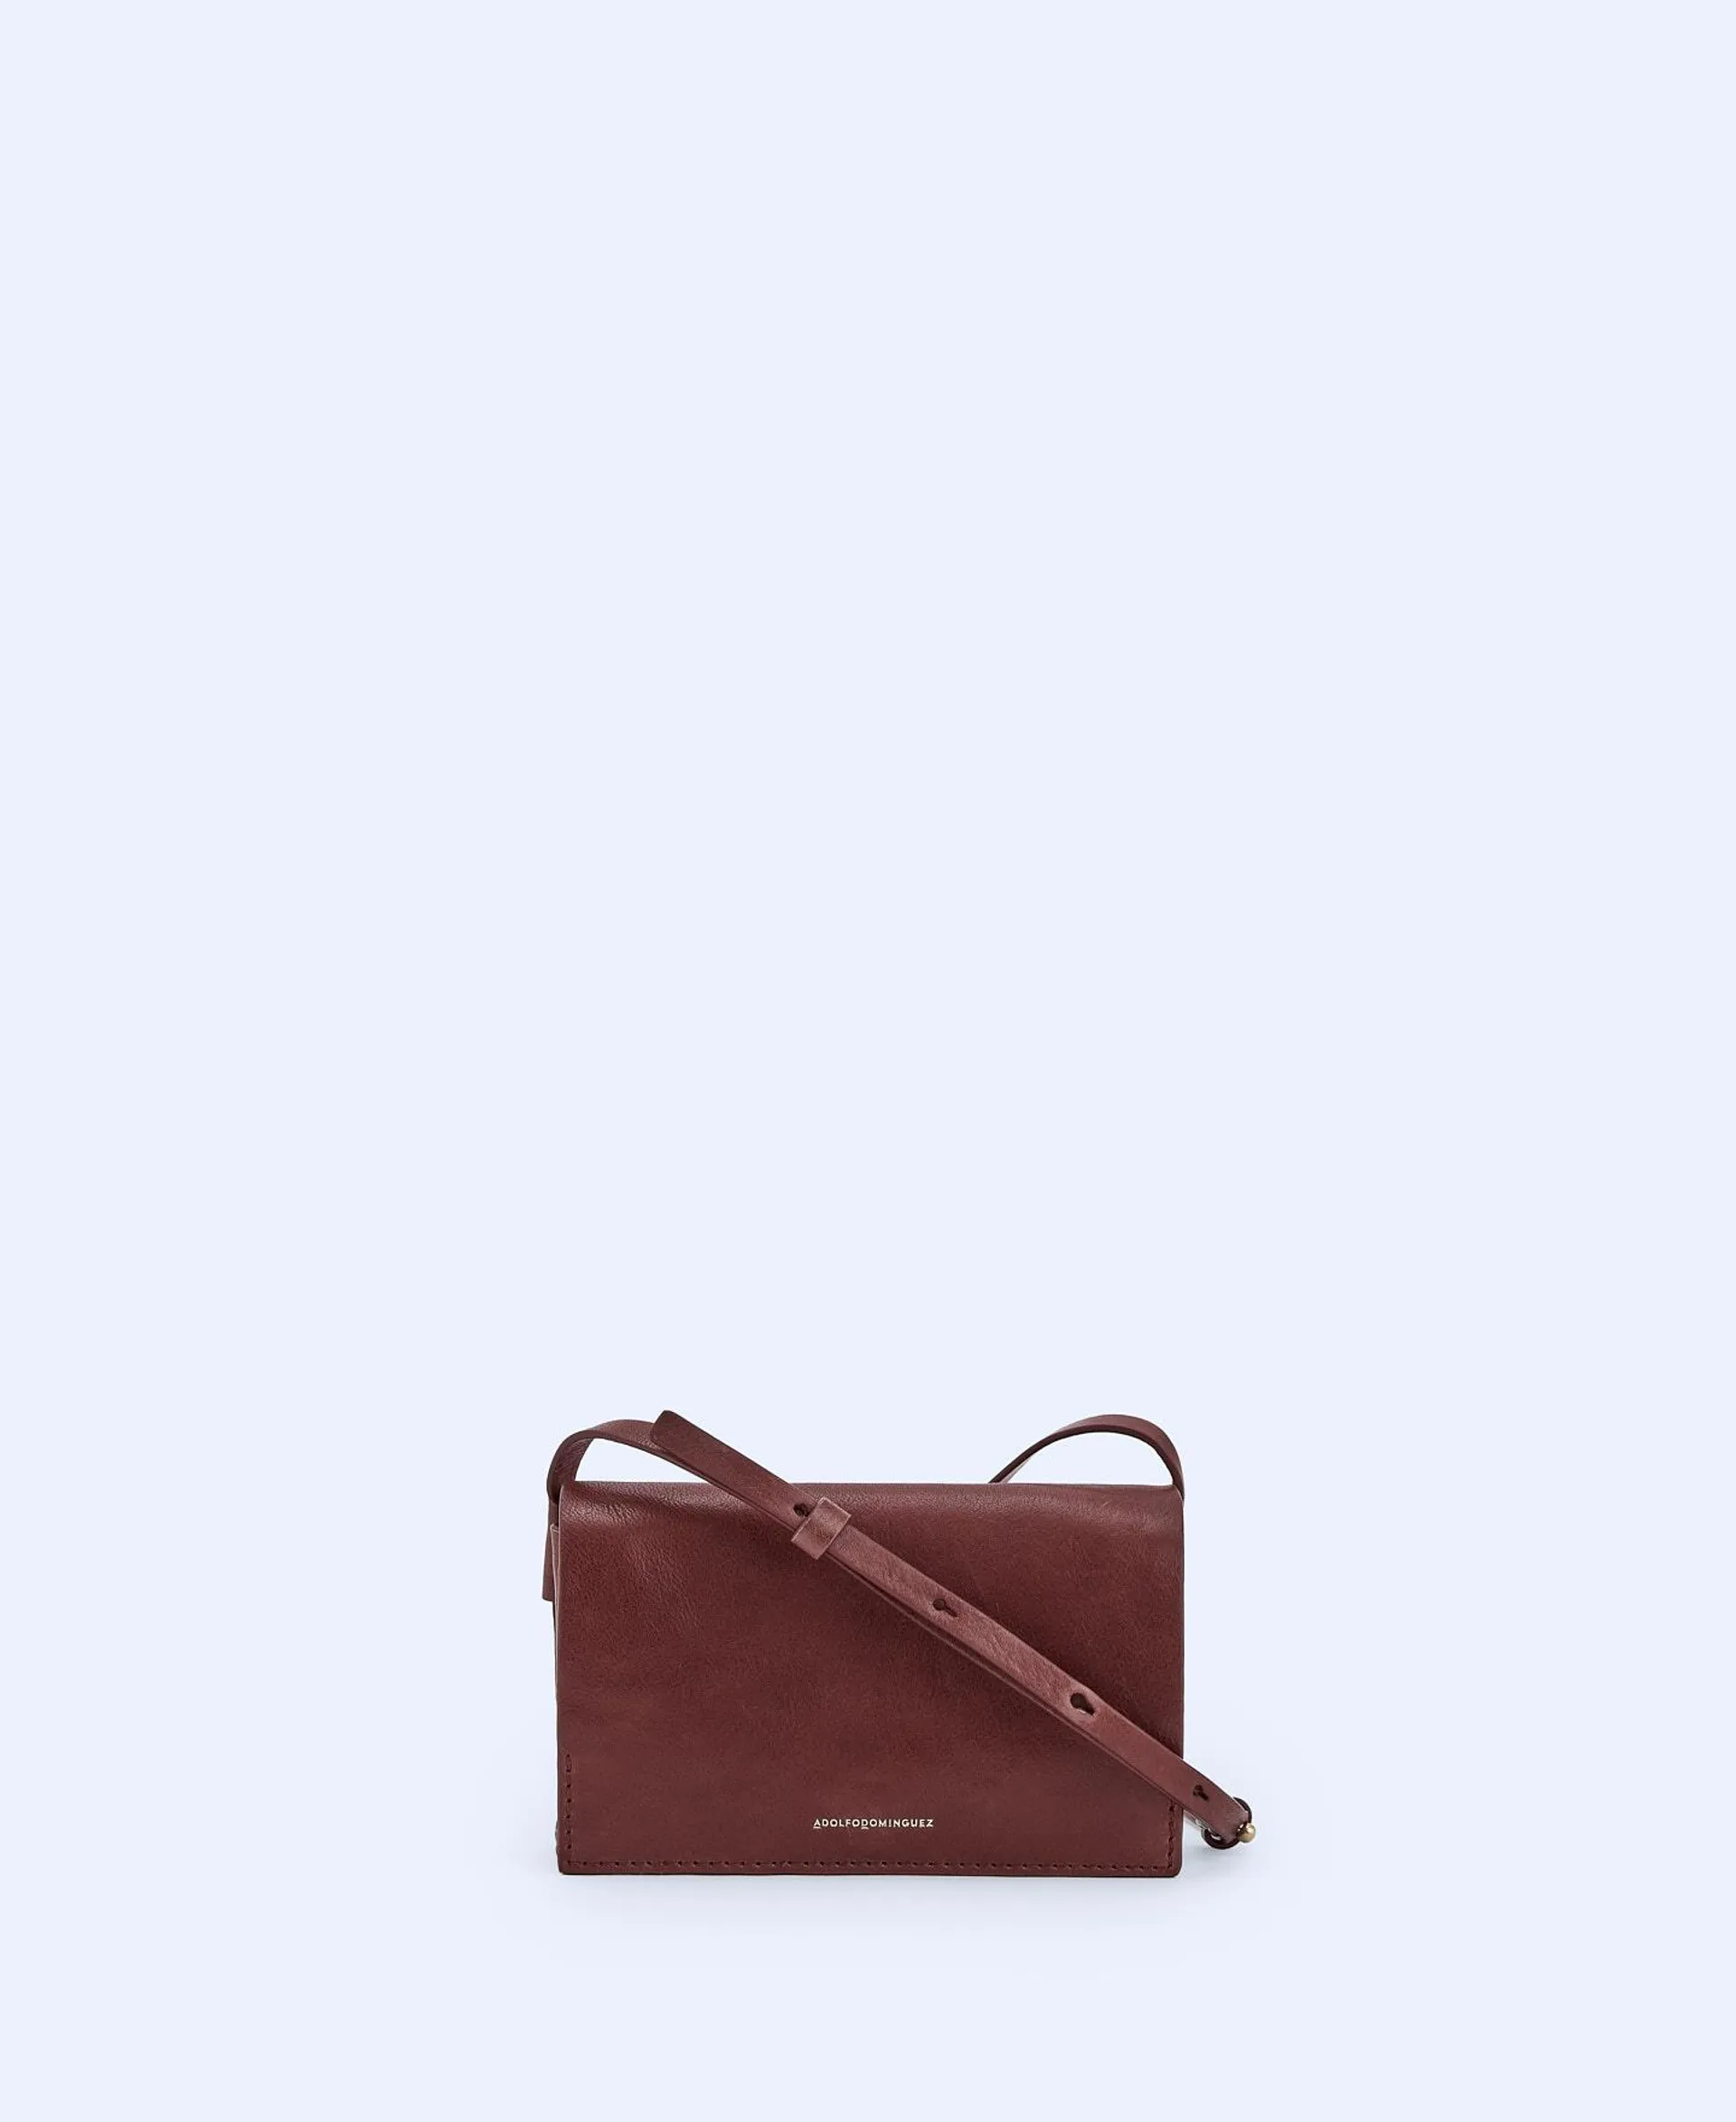 Vachetta leather shoulder bag